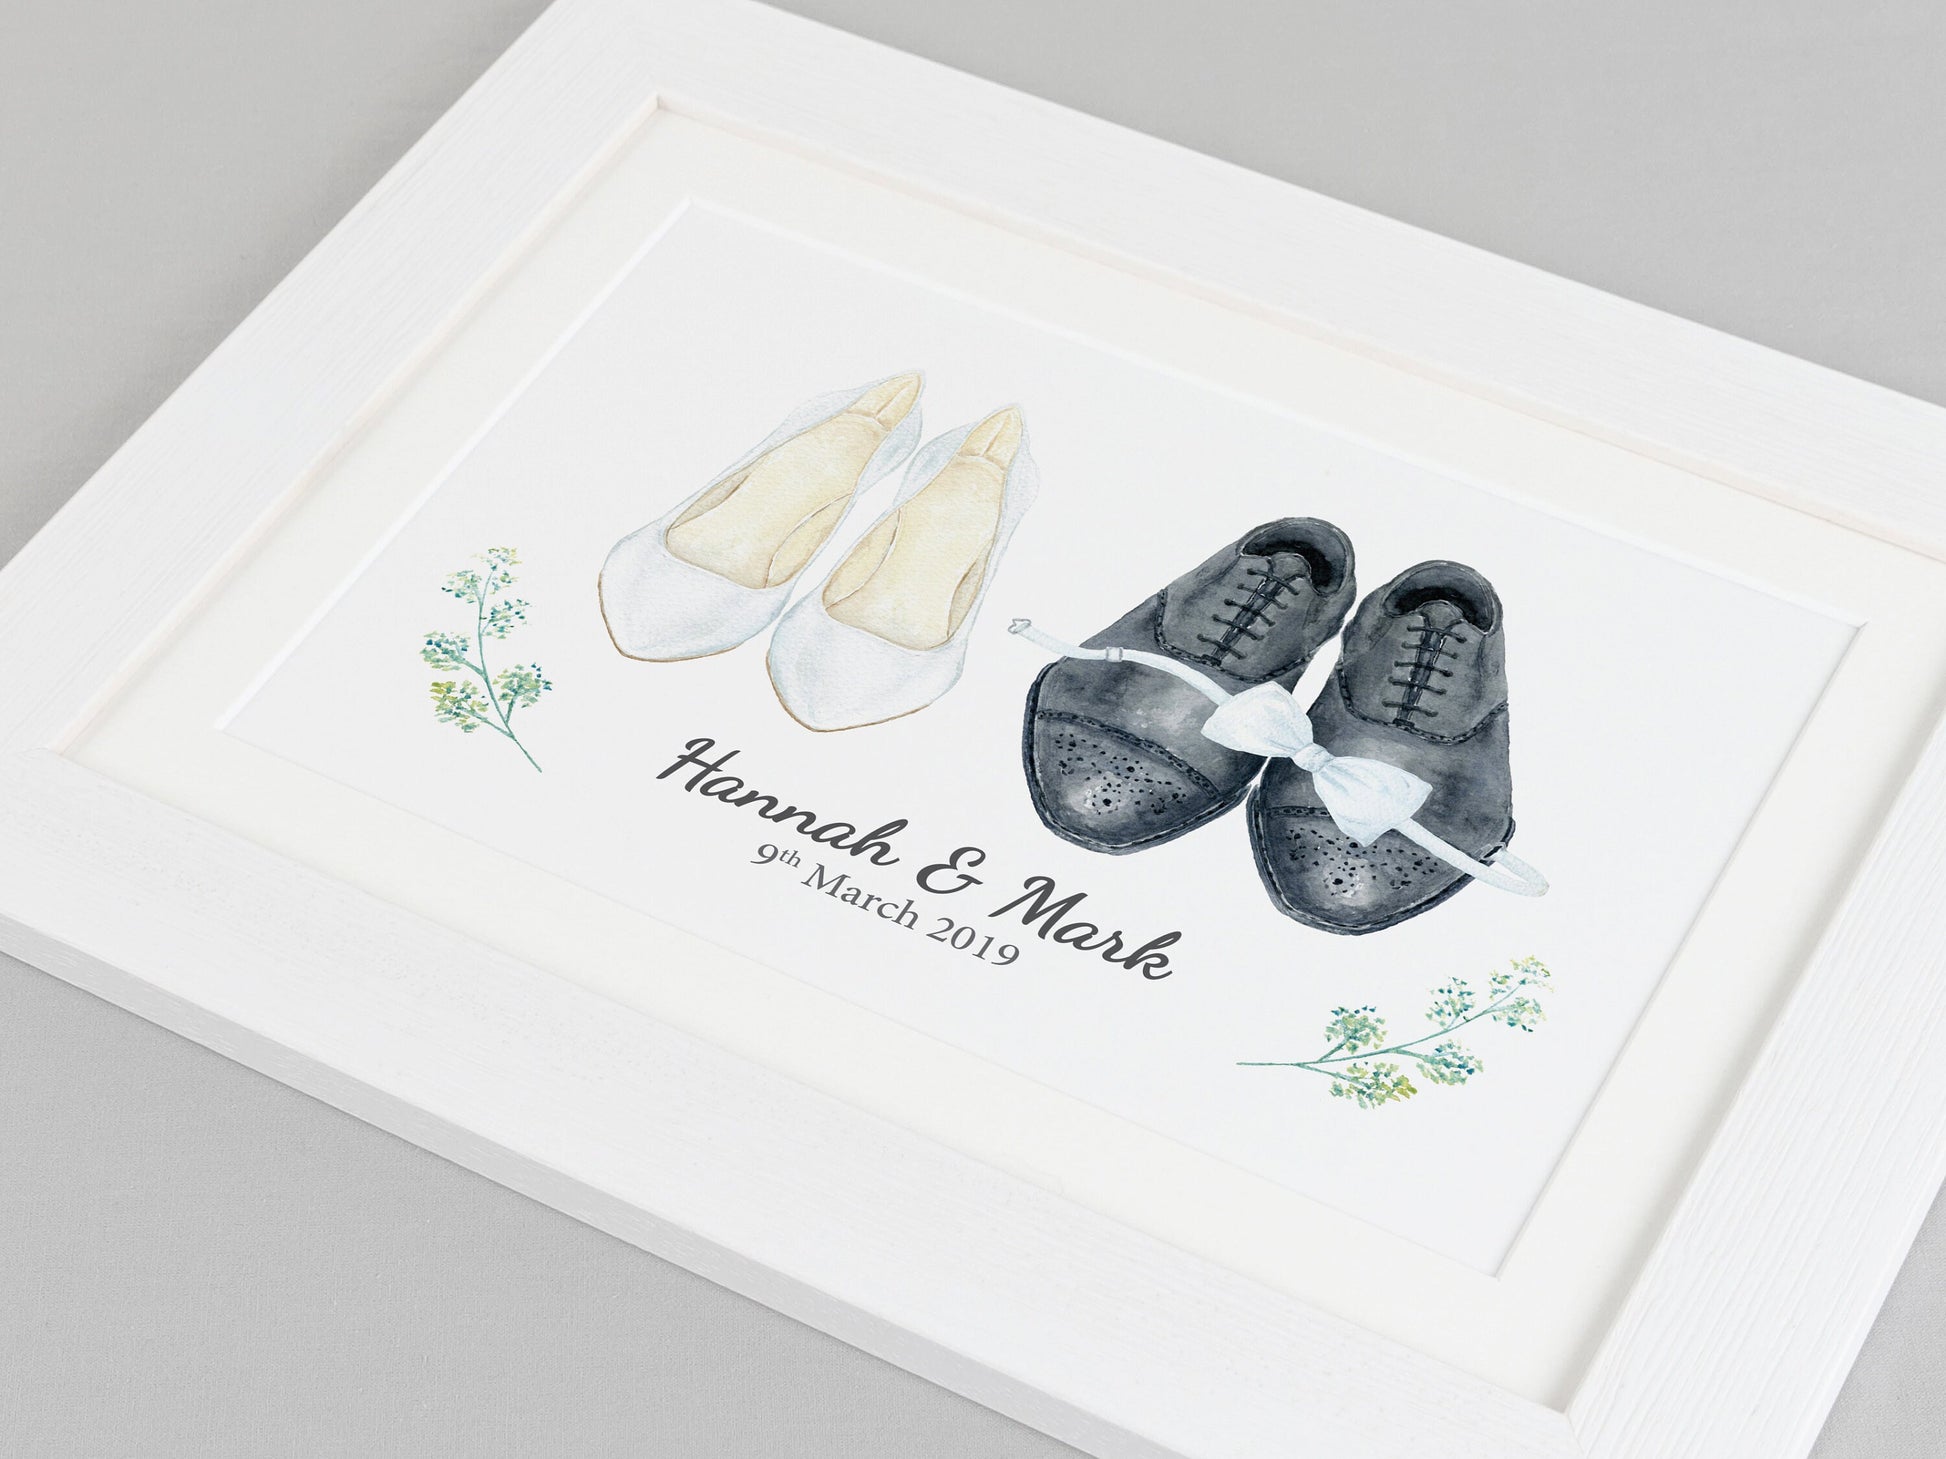 Wedding Gift | Personalised Wedding Present for Couple | Wedding Shoes Print VA128